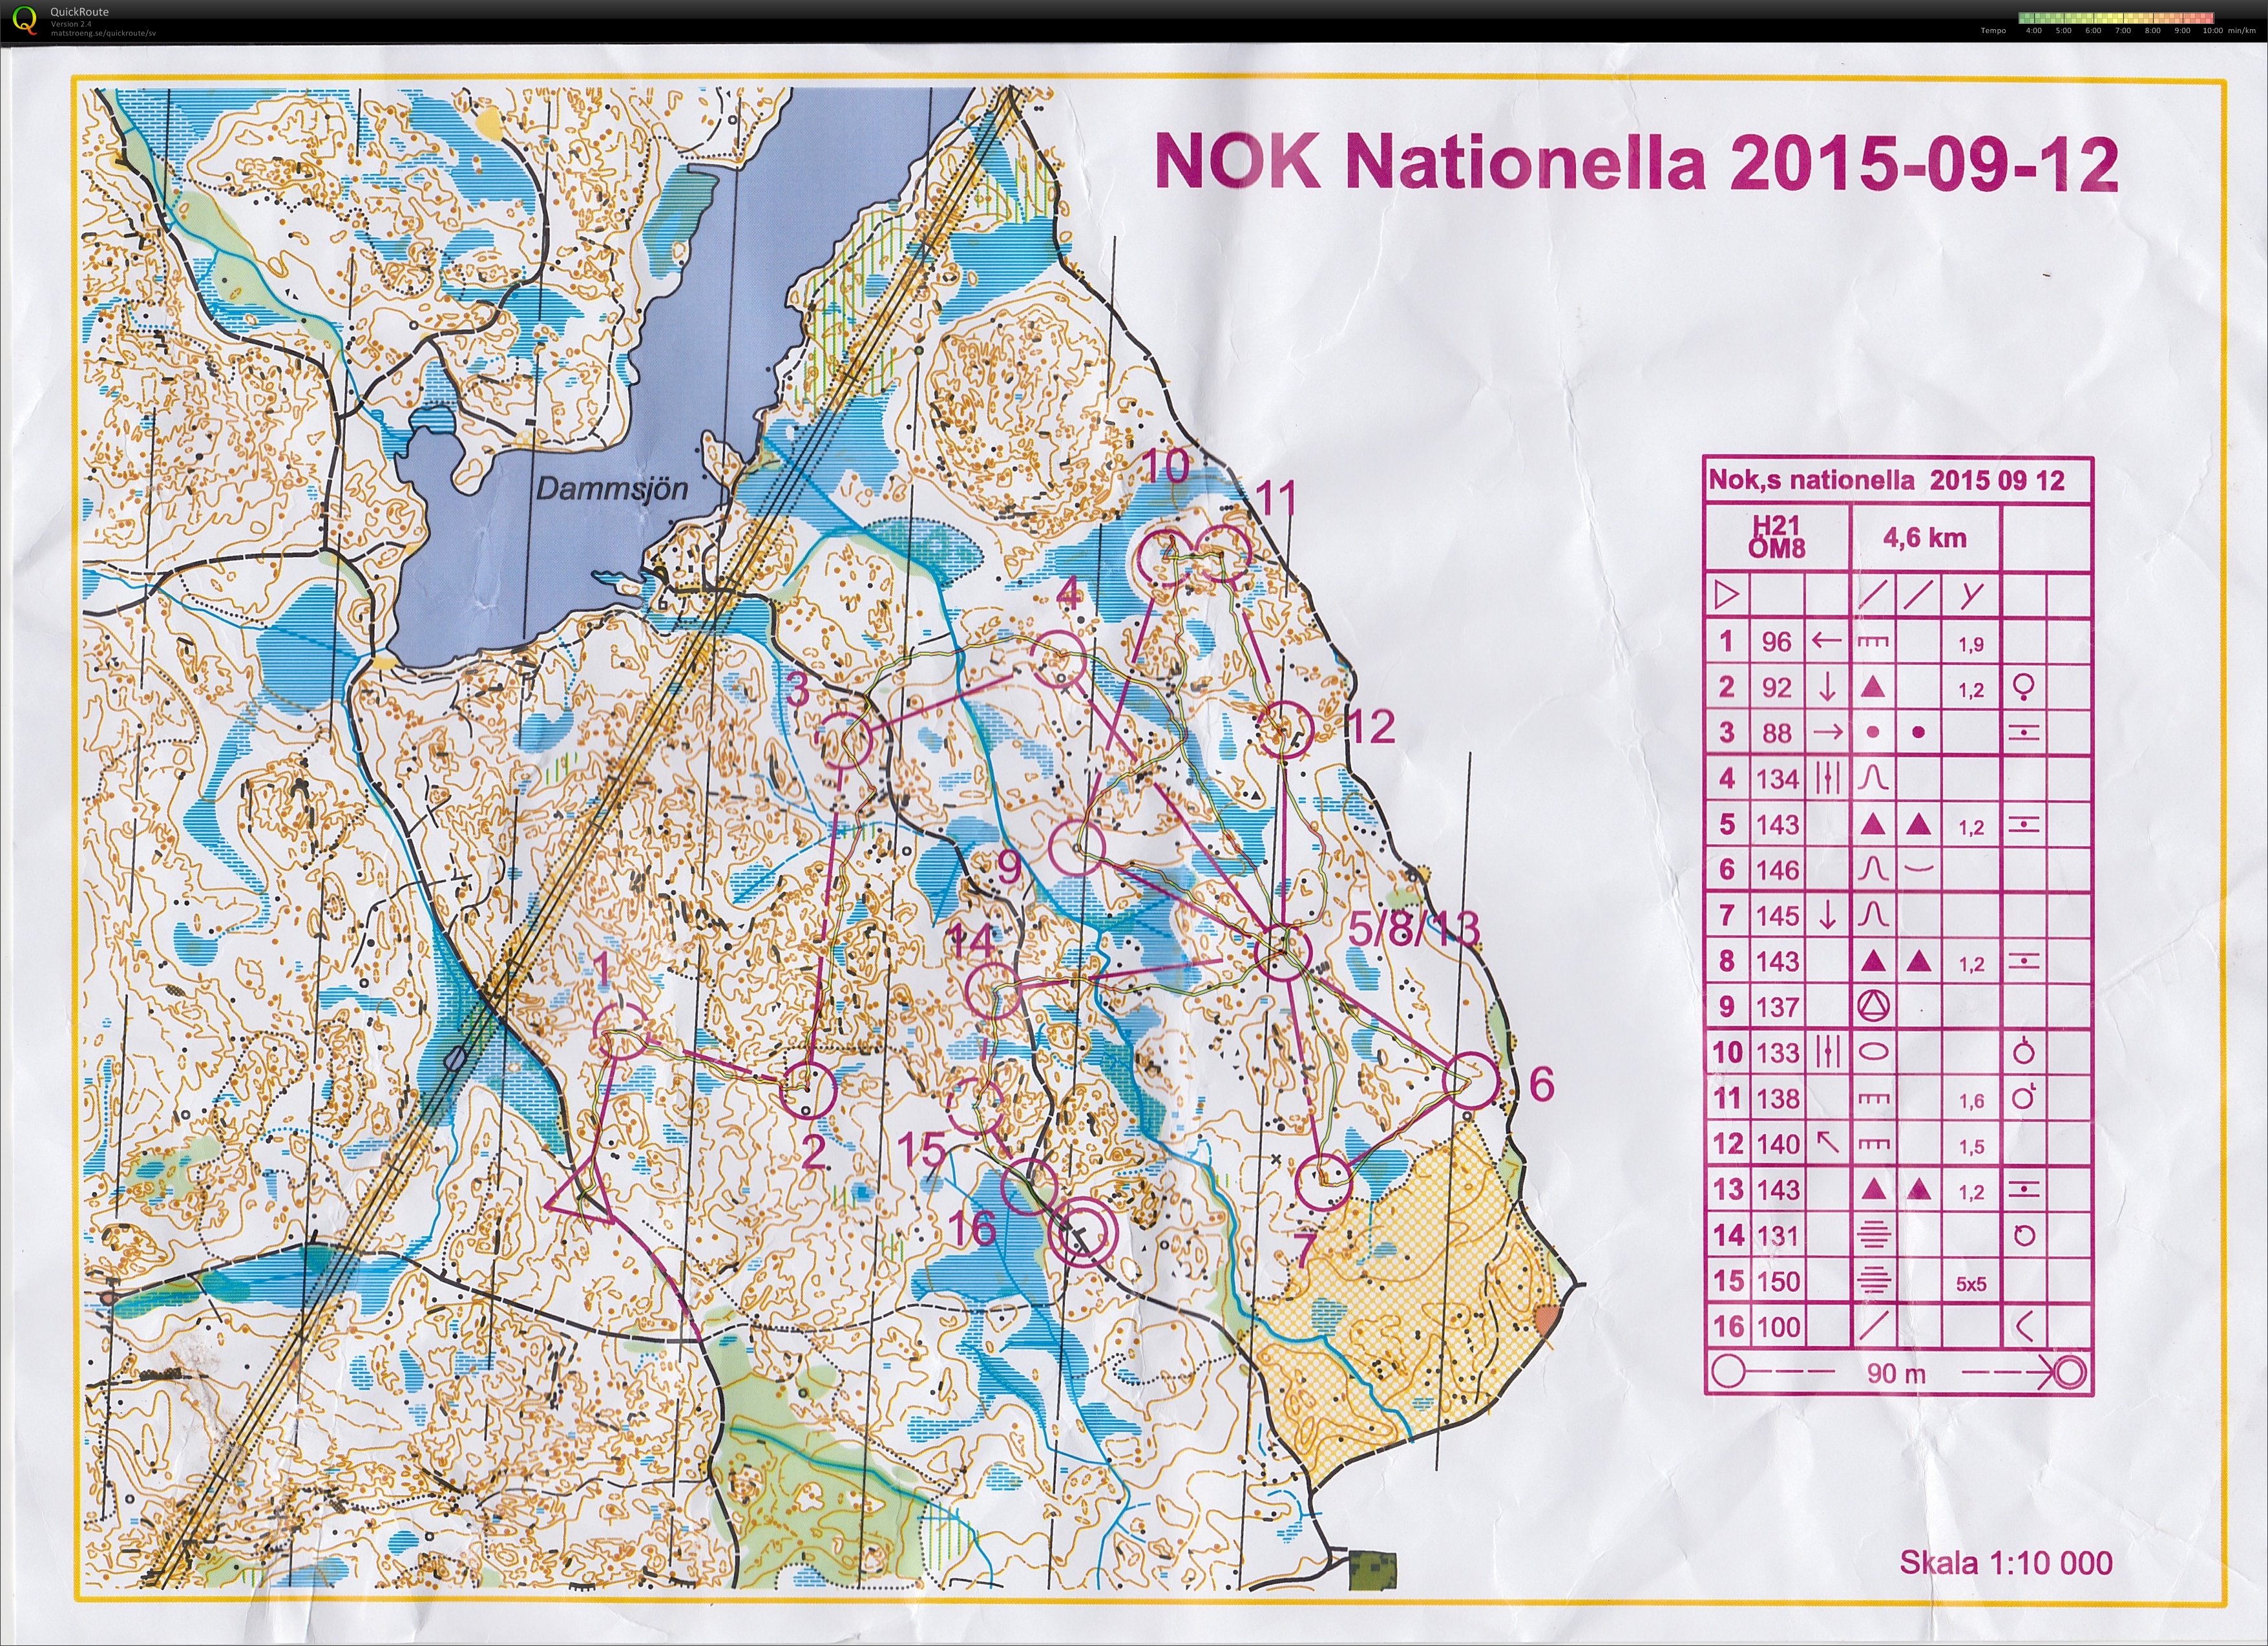 NOKs Nationella (2015-09-12)